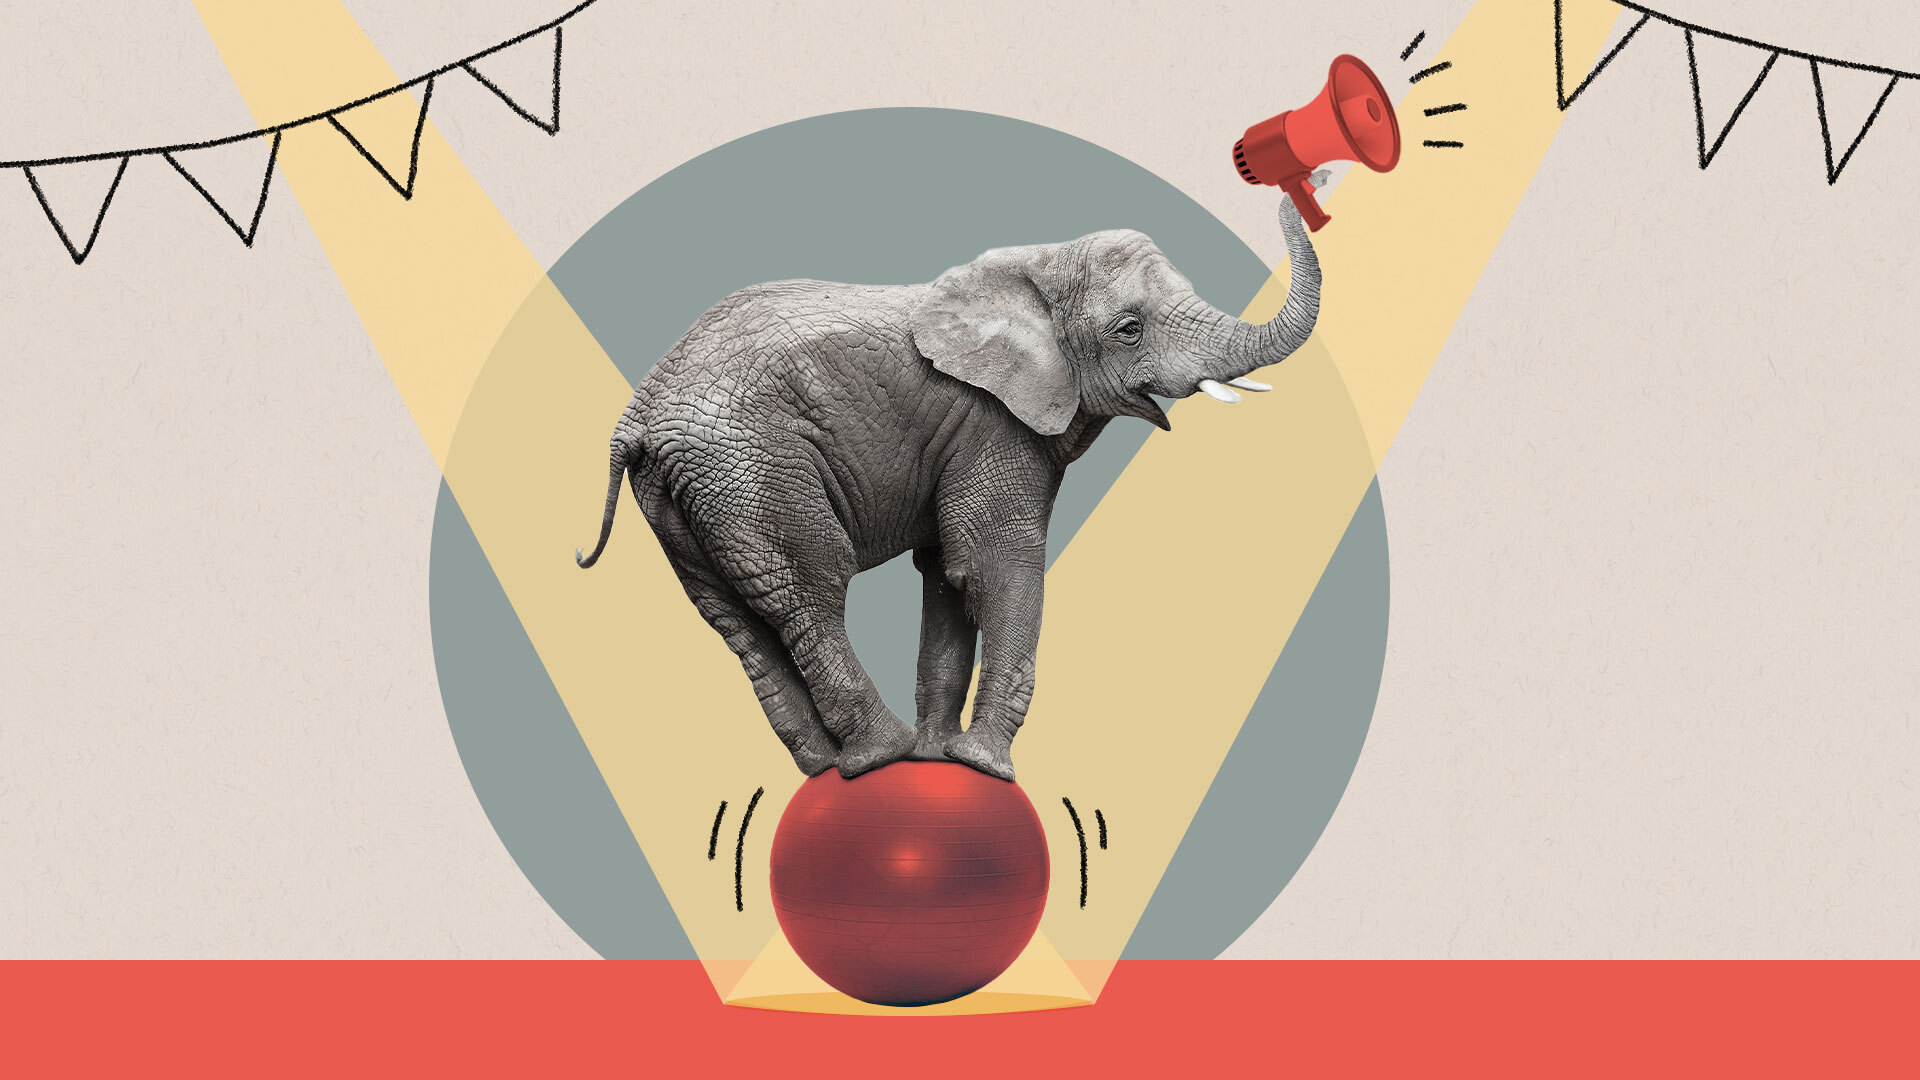 Elephant balancing on ball while holding a megaphone